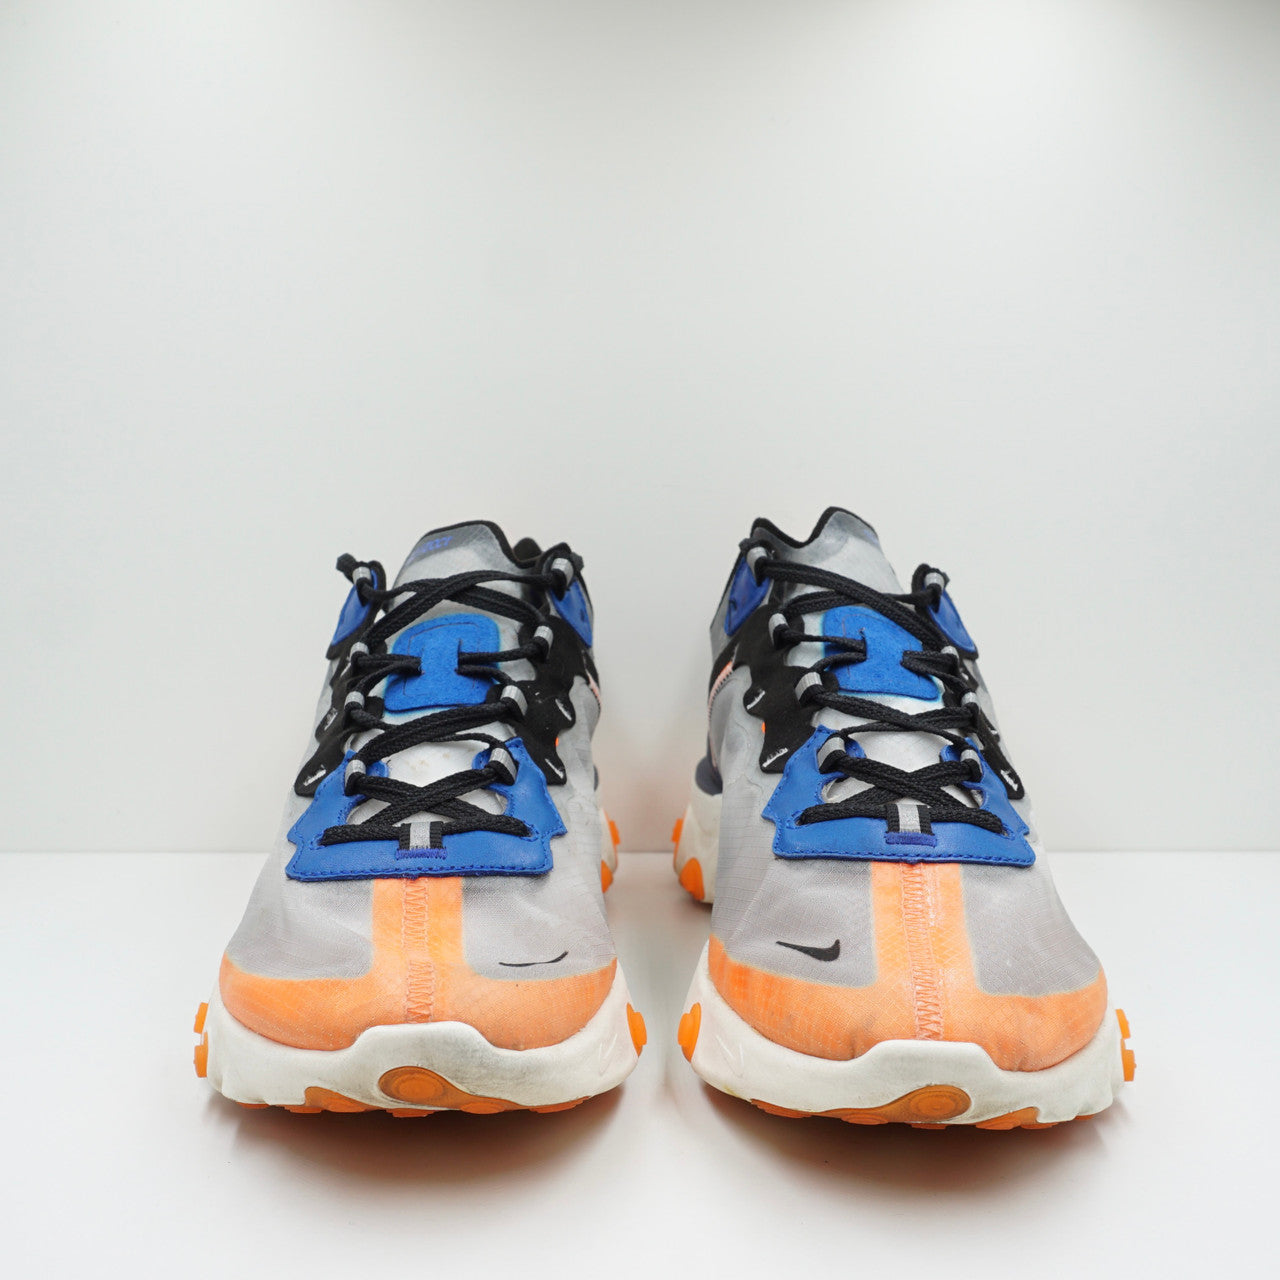 Nike React Element 87 Thunder Blue/Total Orange